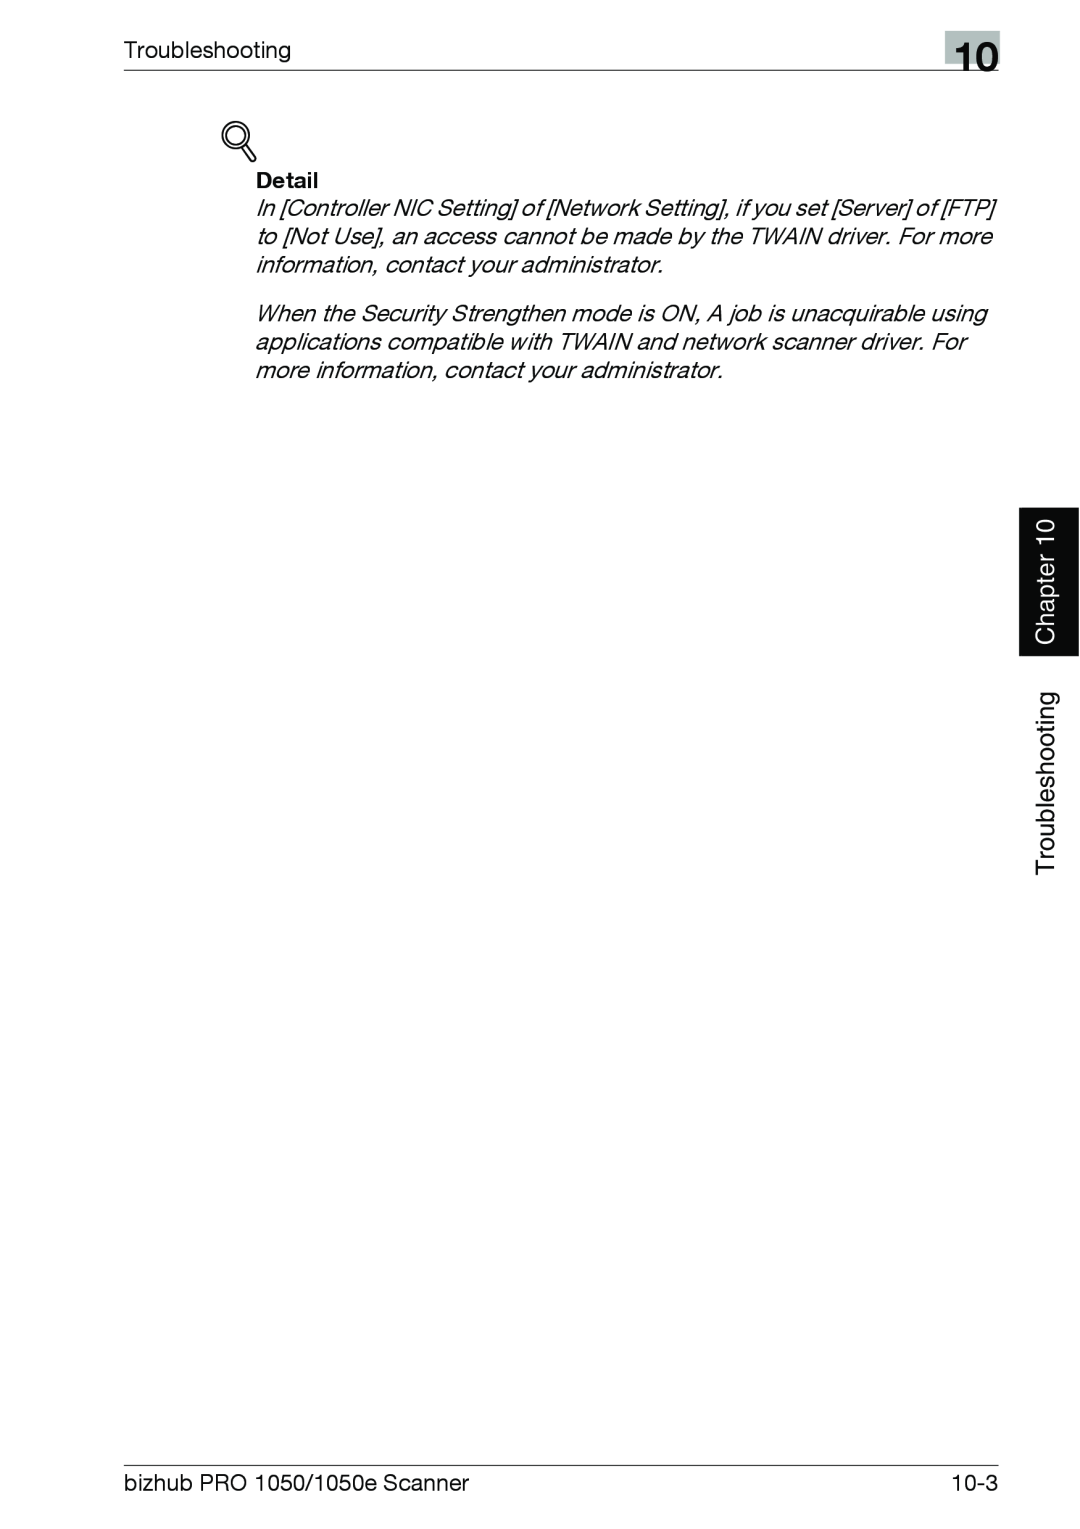 Konica Minolta 1050E appendix Chapter, Troubleshooting, Detail, bizhub PRO 1050/1050e Scanner, 10-3 